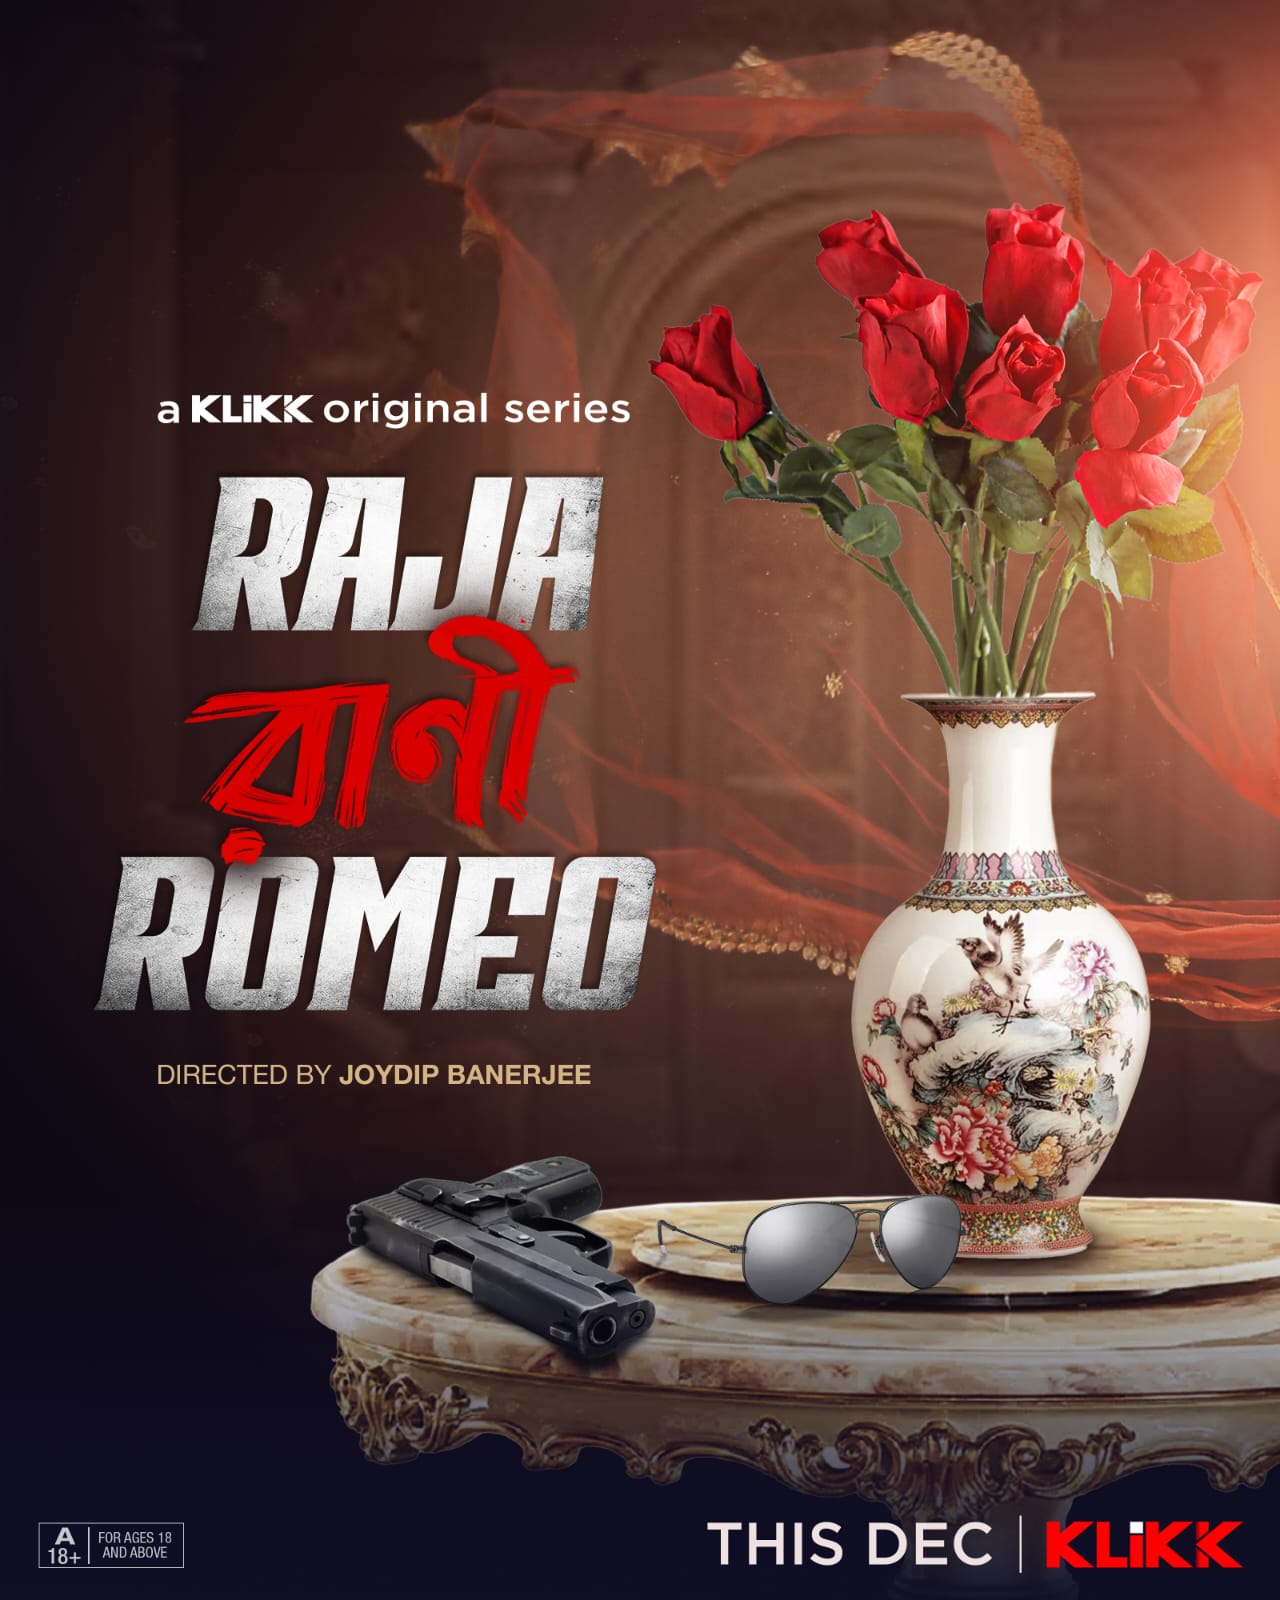 Raja Rani Romeo: ‘মৌঝর’ জুটির মাখো-মাখো প্রেমে তৃতীয় ব্যক্তি কে?